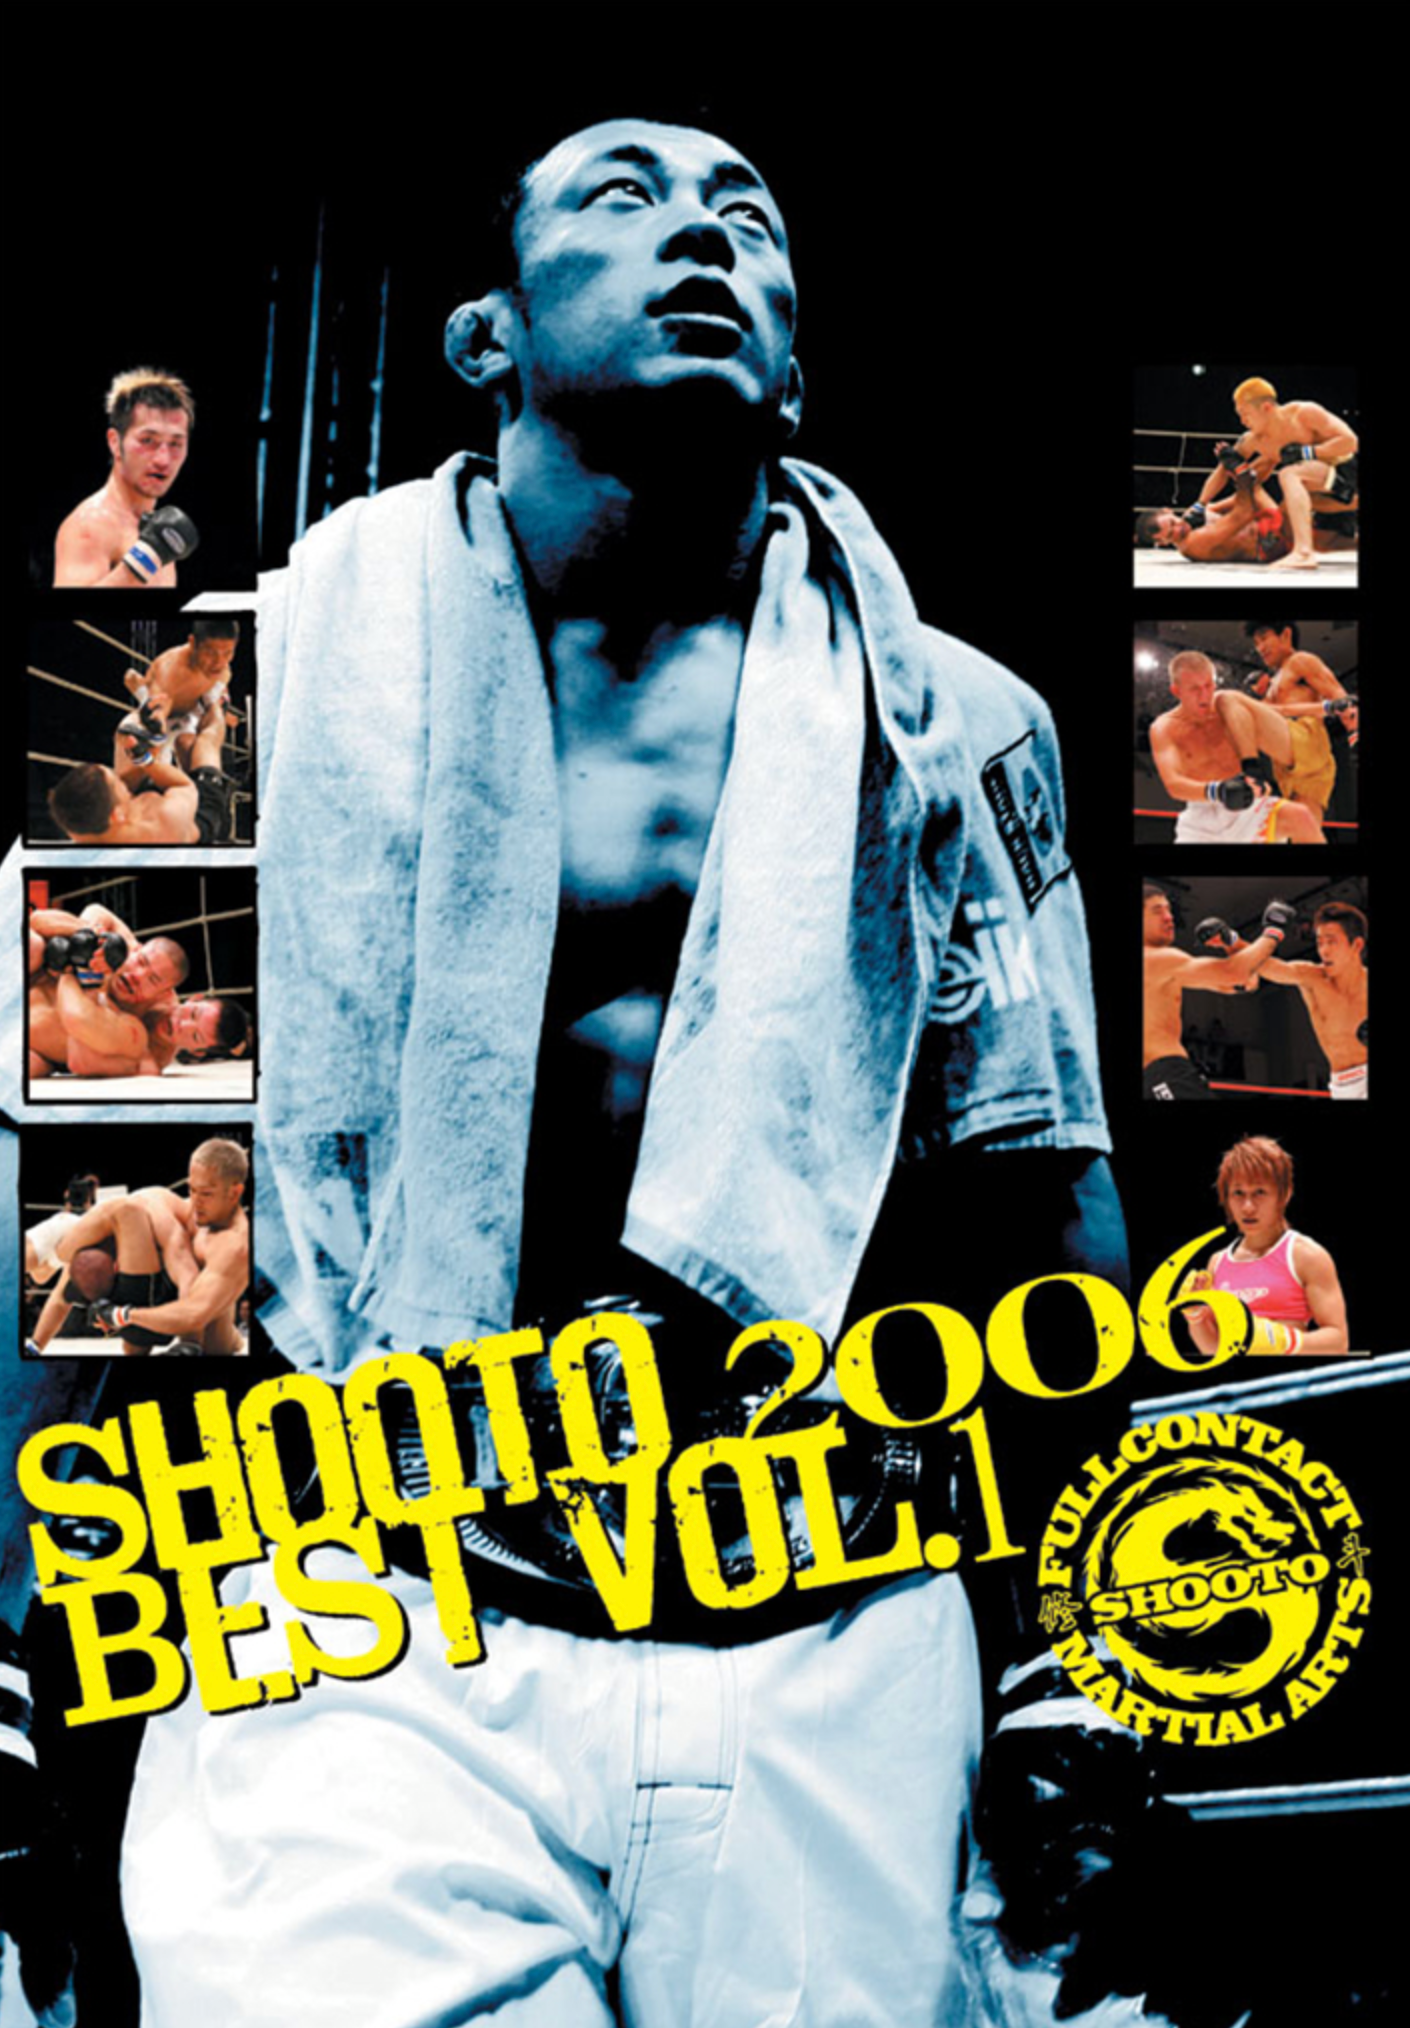 Best of Shooto 2006 DVD Vol 1 - Budovideos Inc